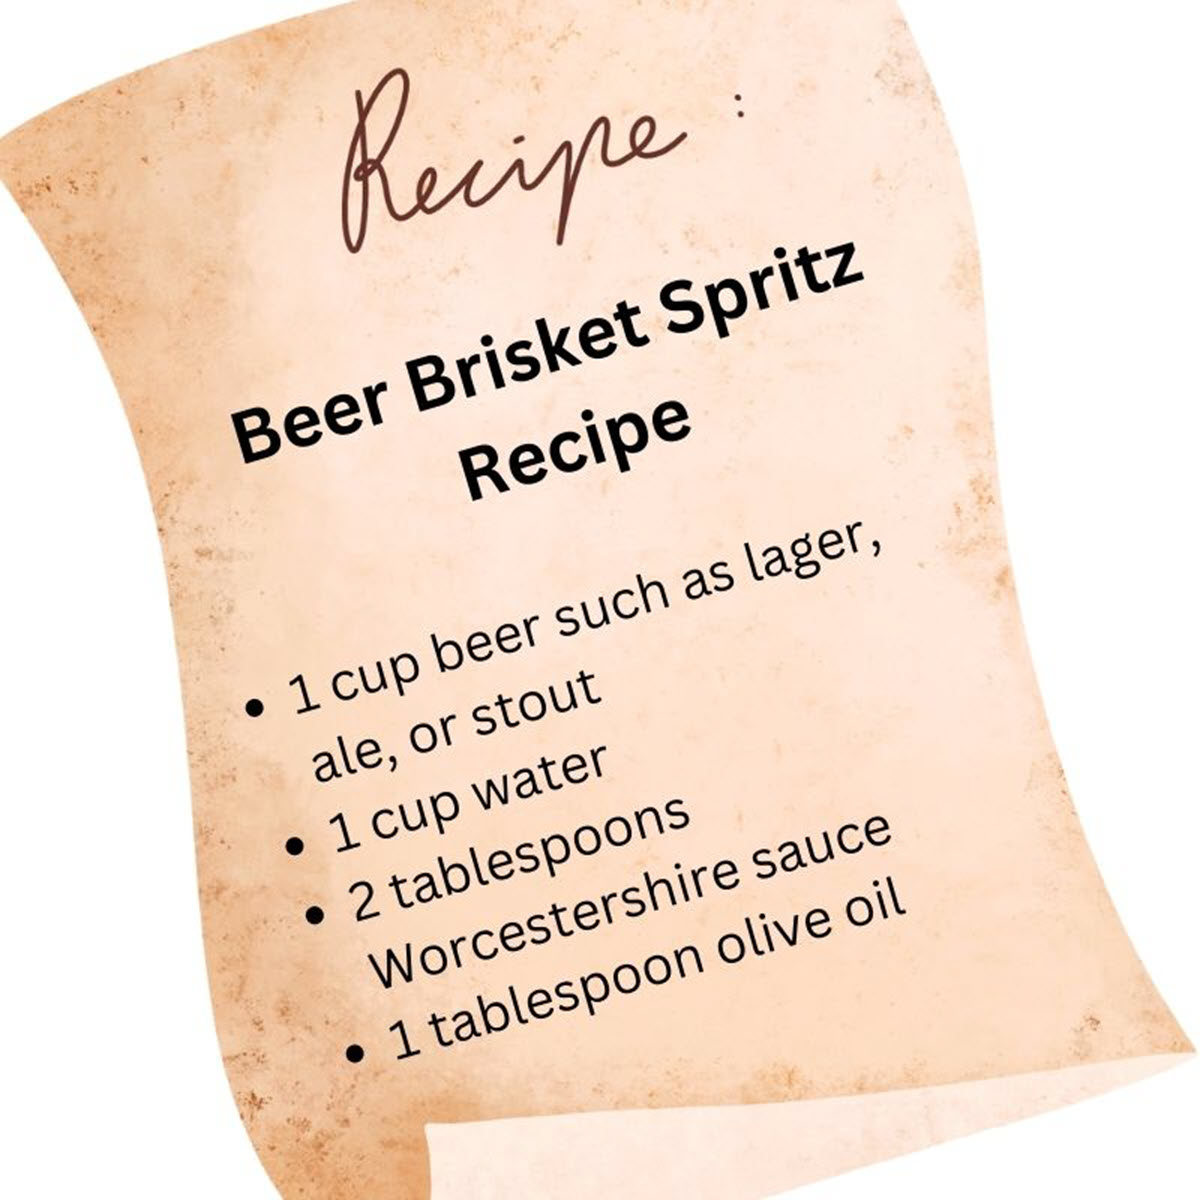 Beer brisket spritz recipe